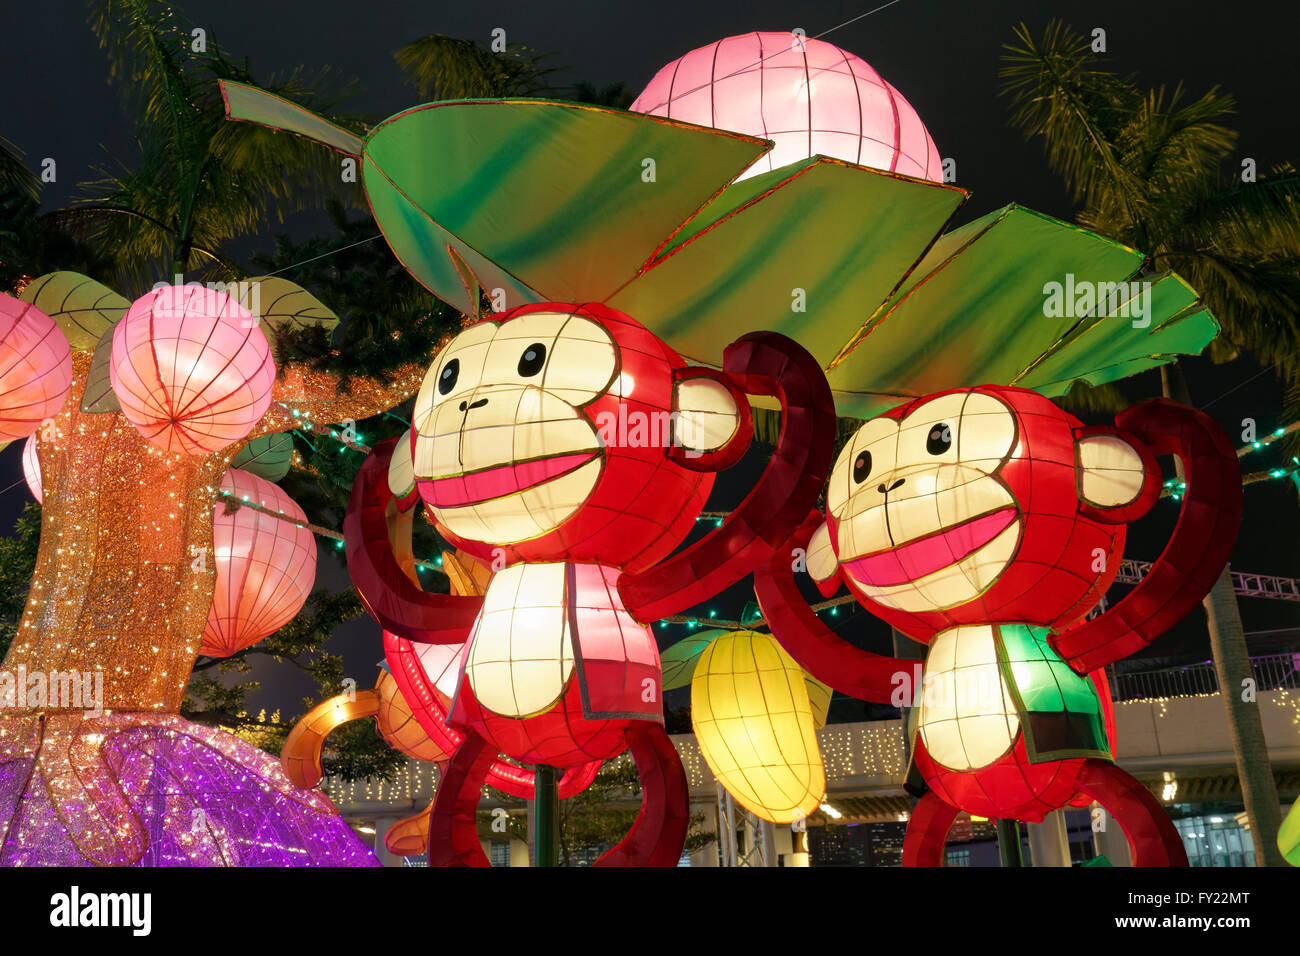 Monkey figures as lanterns, exhibition for the Chinese Year of the Monkey 2016, Tsim Sha Tsui, Kowloon, Hong Kong, China Stock Photo